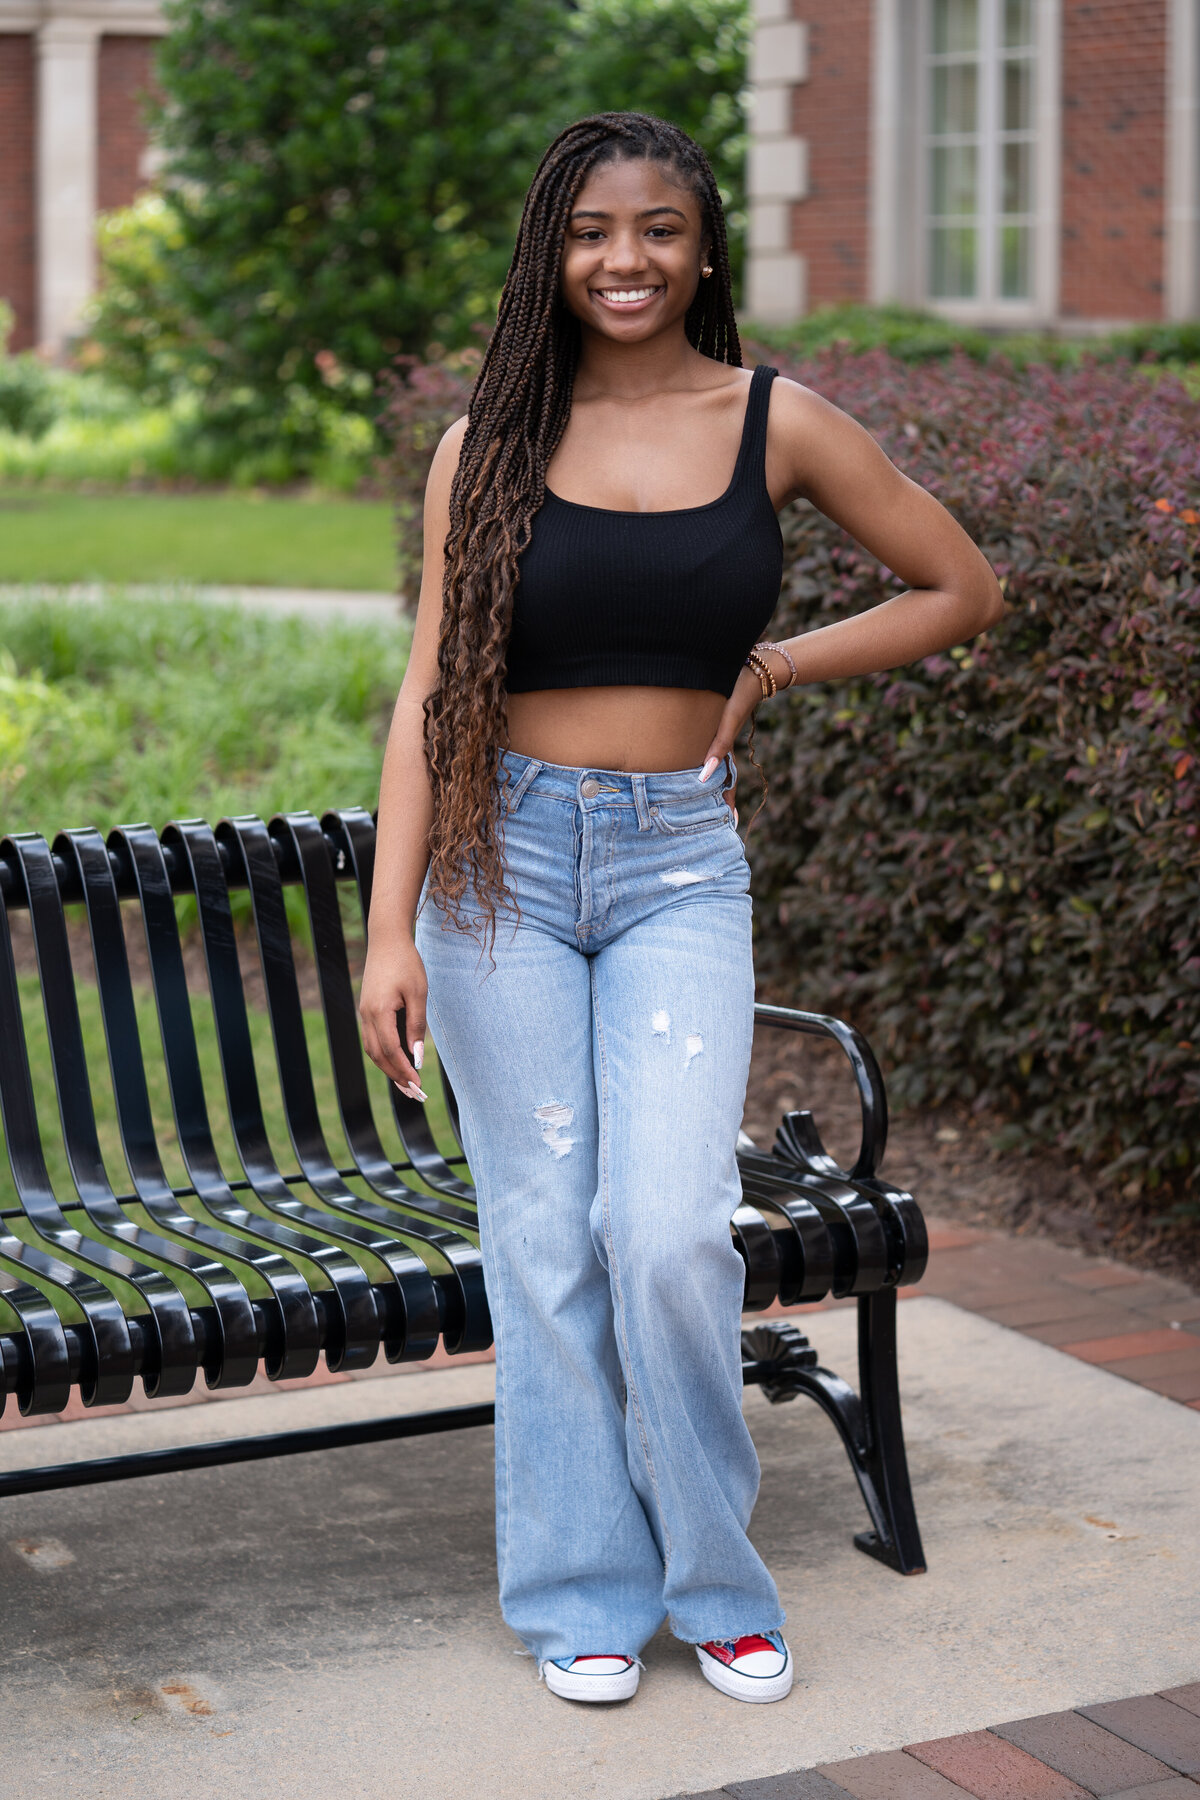 Black female black top blue jeans